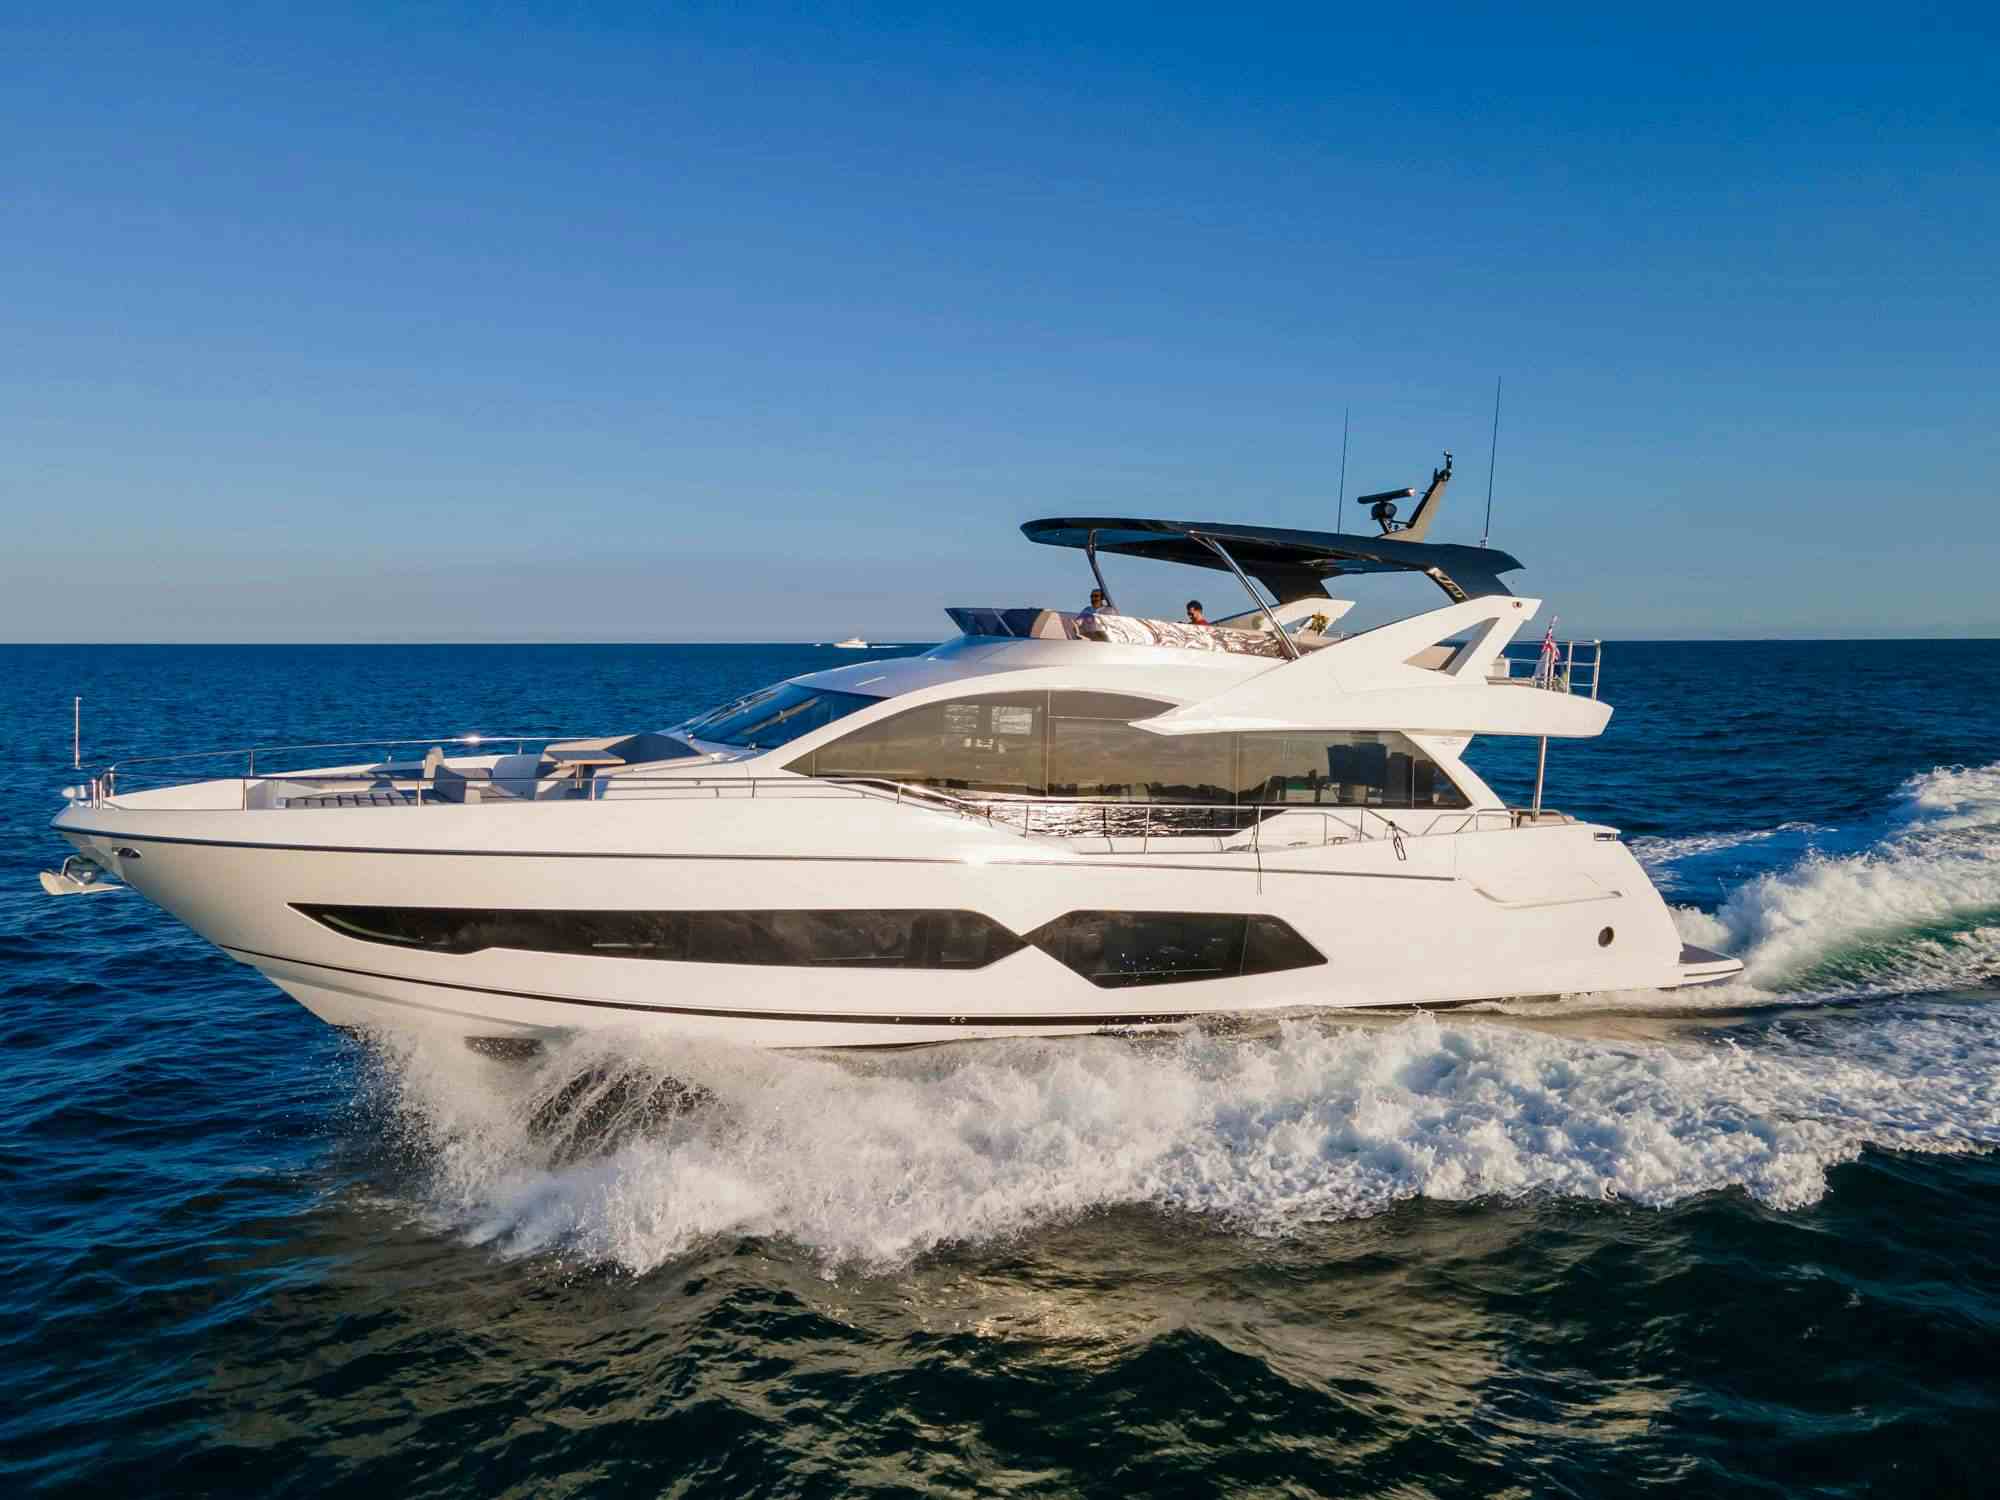 Milamo - Yacht Charter Newport & Boat hire in US East Coast & Bahamas 1